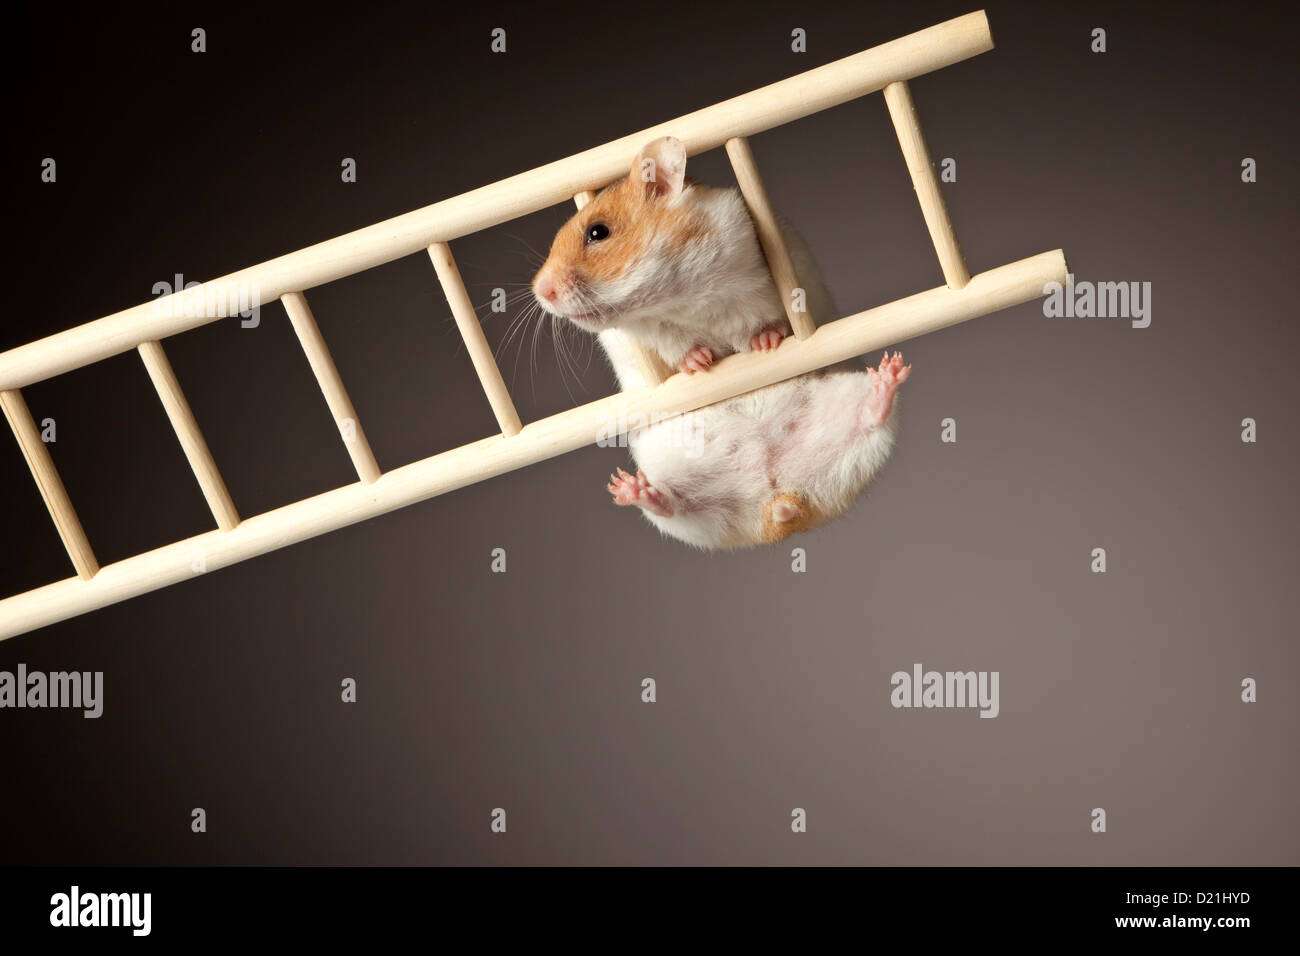 Hamster hängen, Leiter, Nahaufnahme Stockfotografie - Alamy